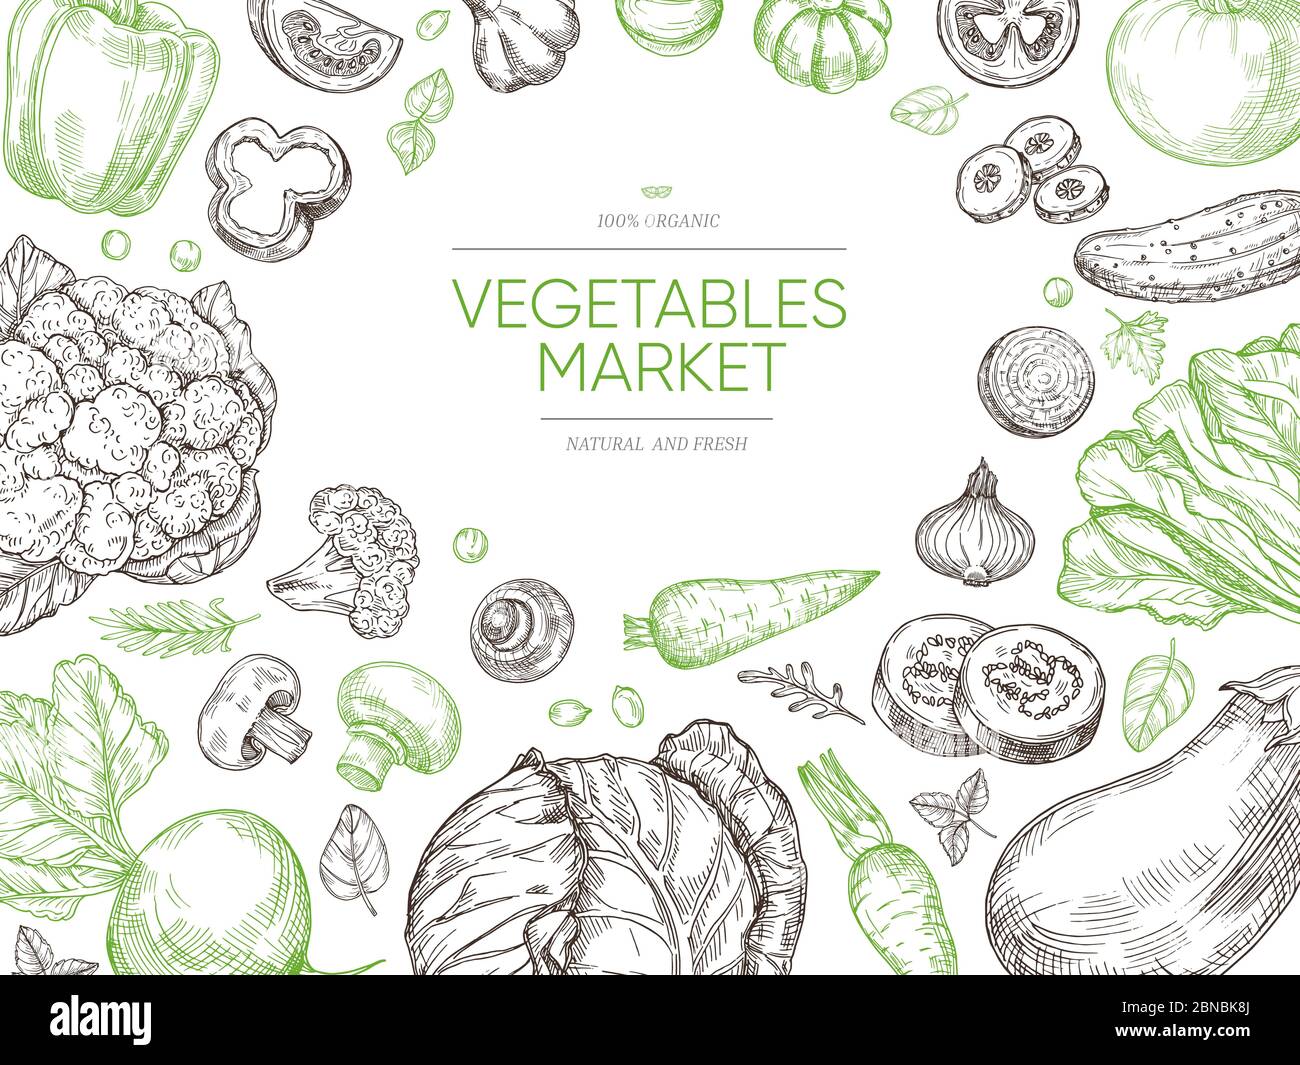 46,691 Vegetable Market Sketch Images, Stock Photos, 3D objects, & Vectors  | Shutterstock